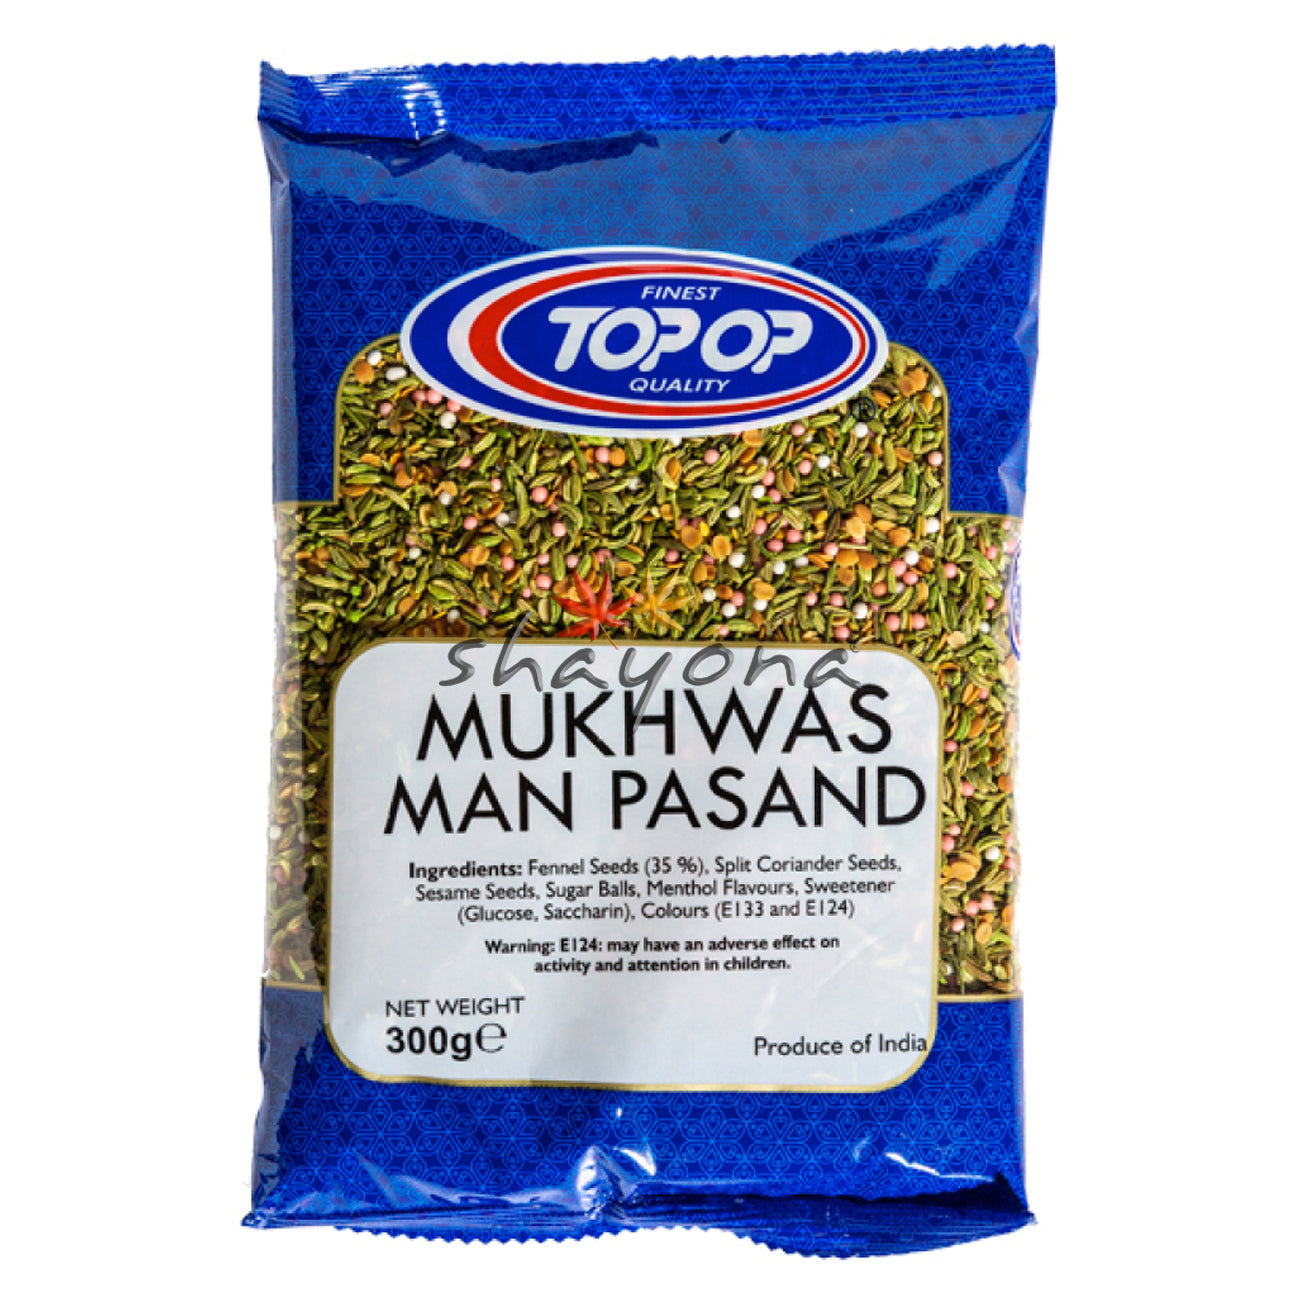 TopOp Manpasand Mukhwas